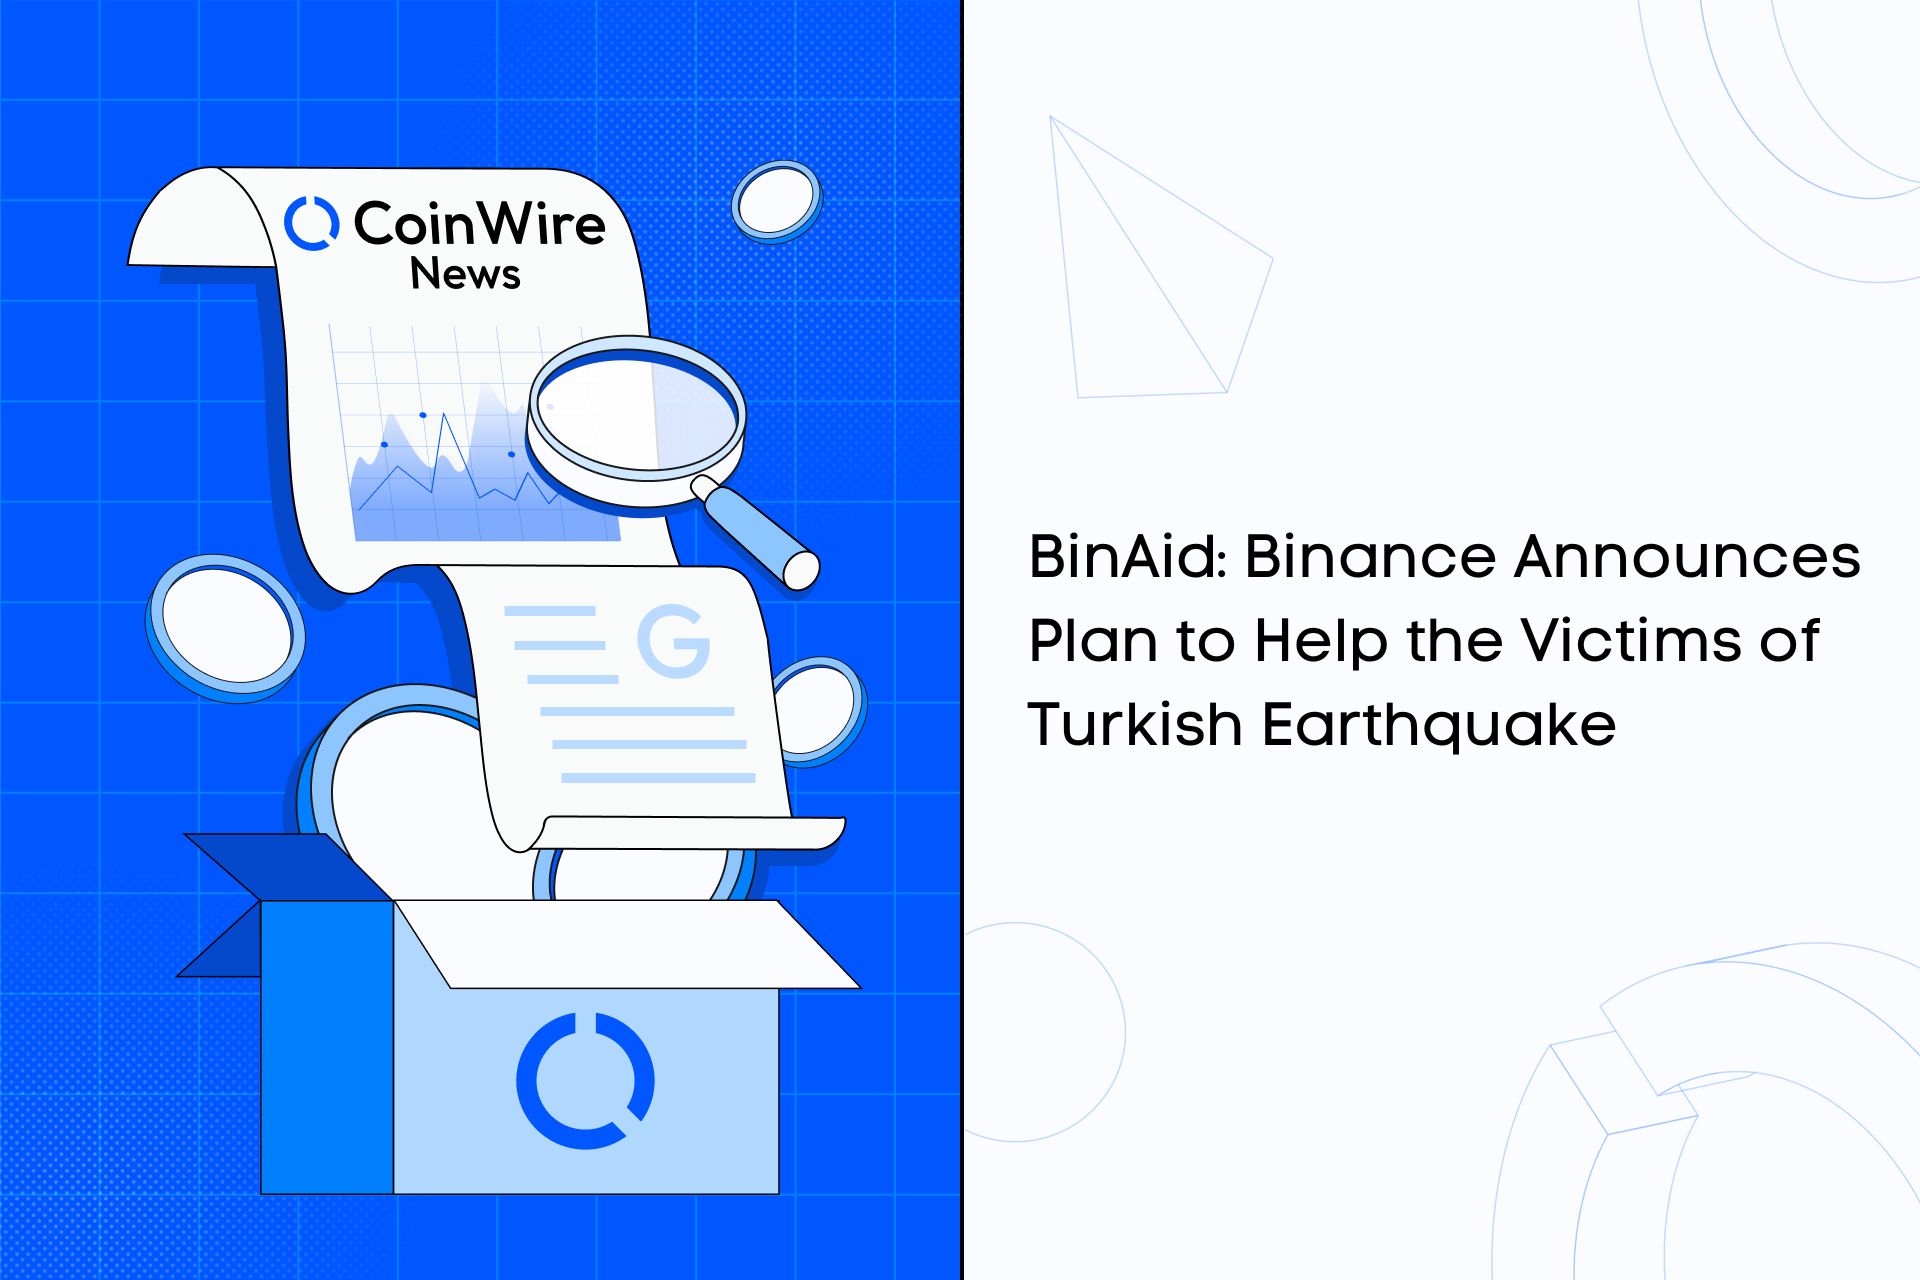 Binaid: Binance Announces Plan To Help The Victims Of Turkish Earthquake